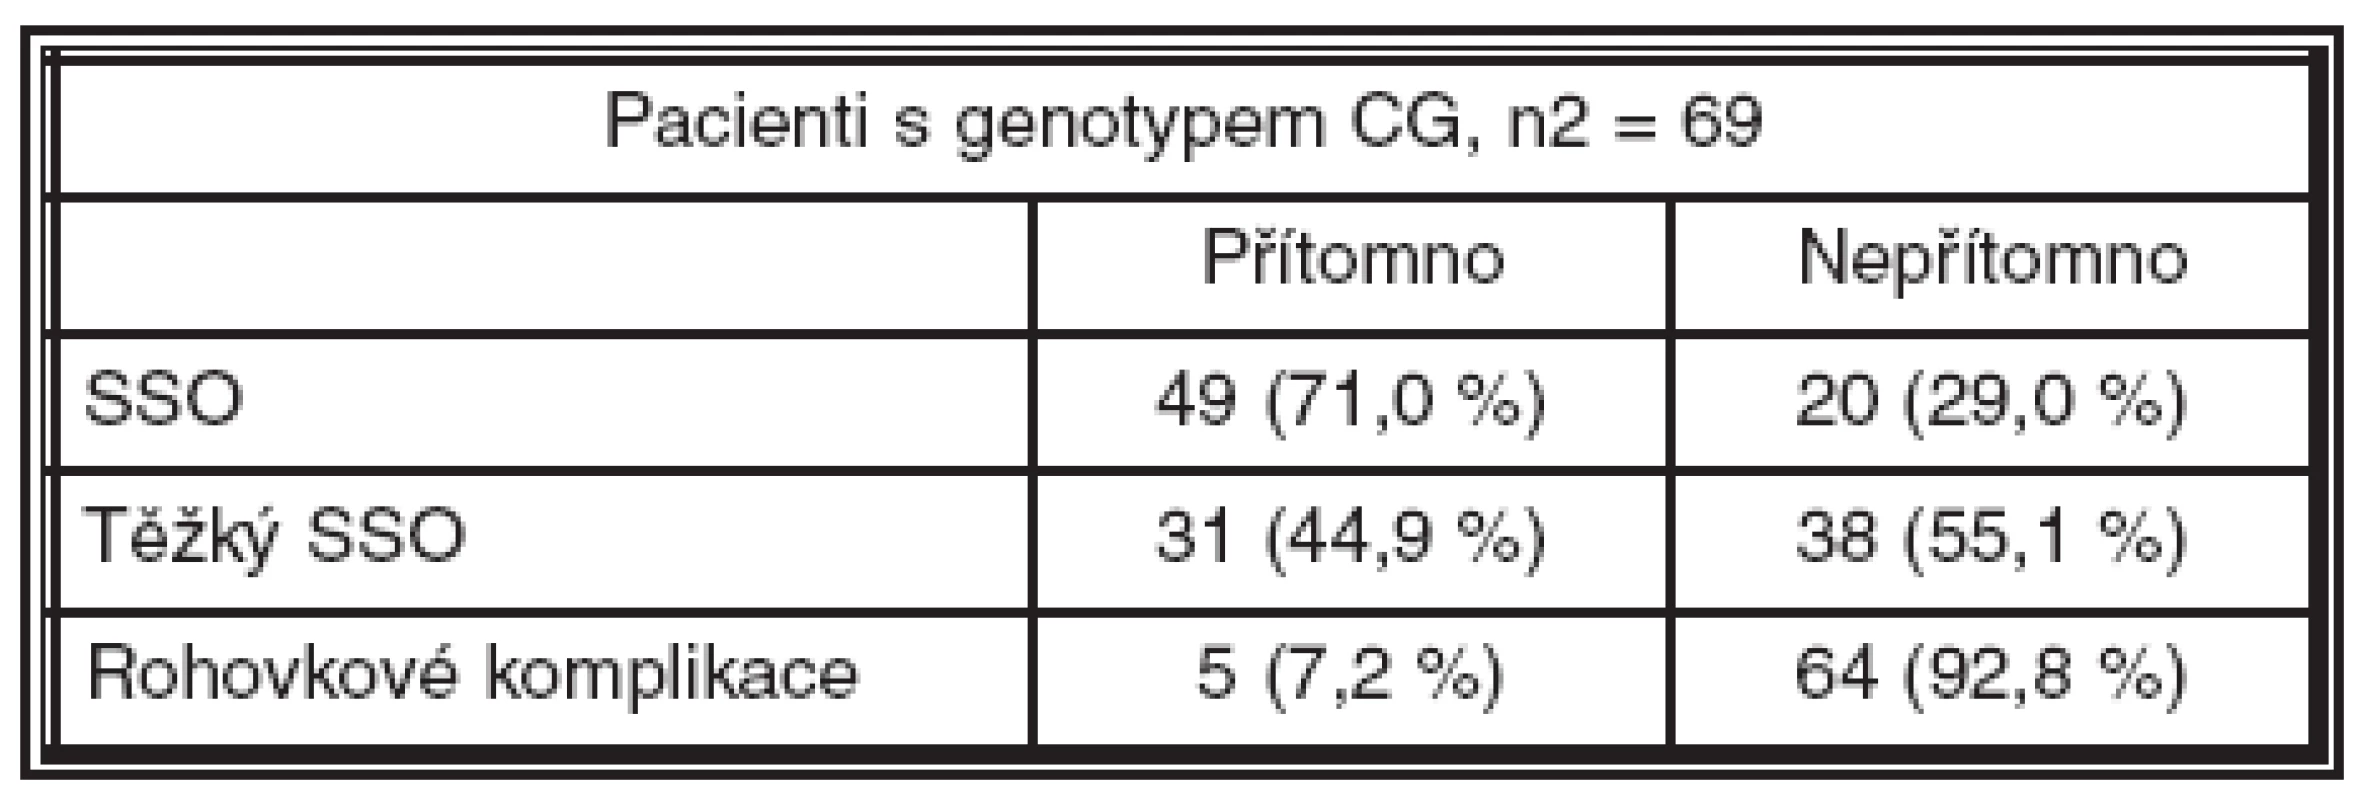 Pacienti s genotypem CG polymorfismu -174 genu IL-6